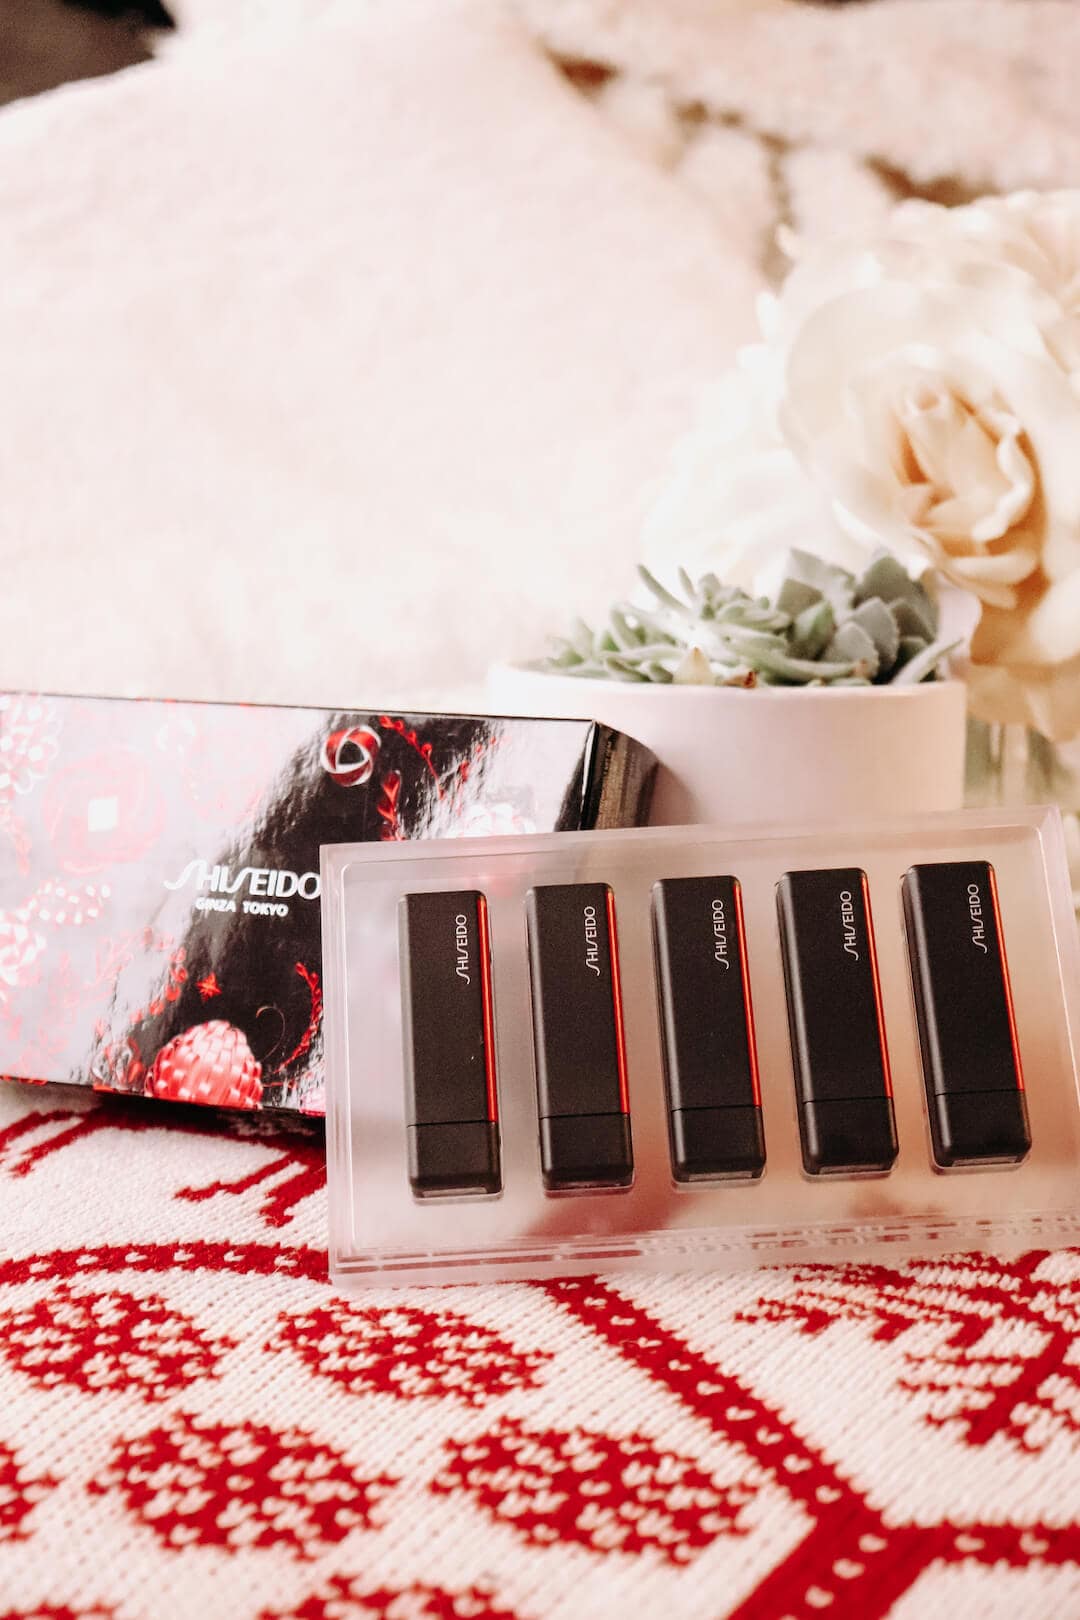 shiseido-modernmatte-lipstick-gift-set-sephora-2018